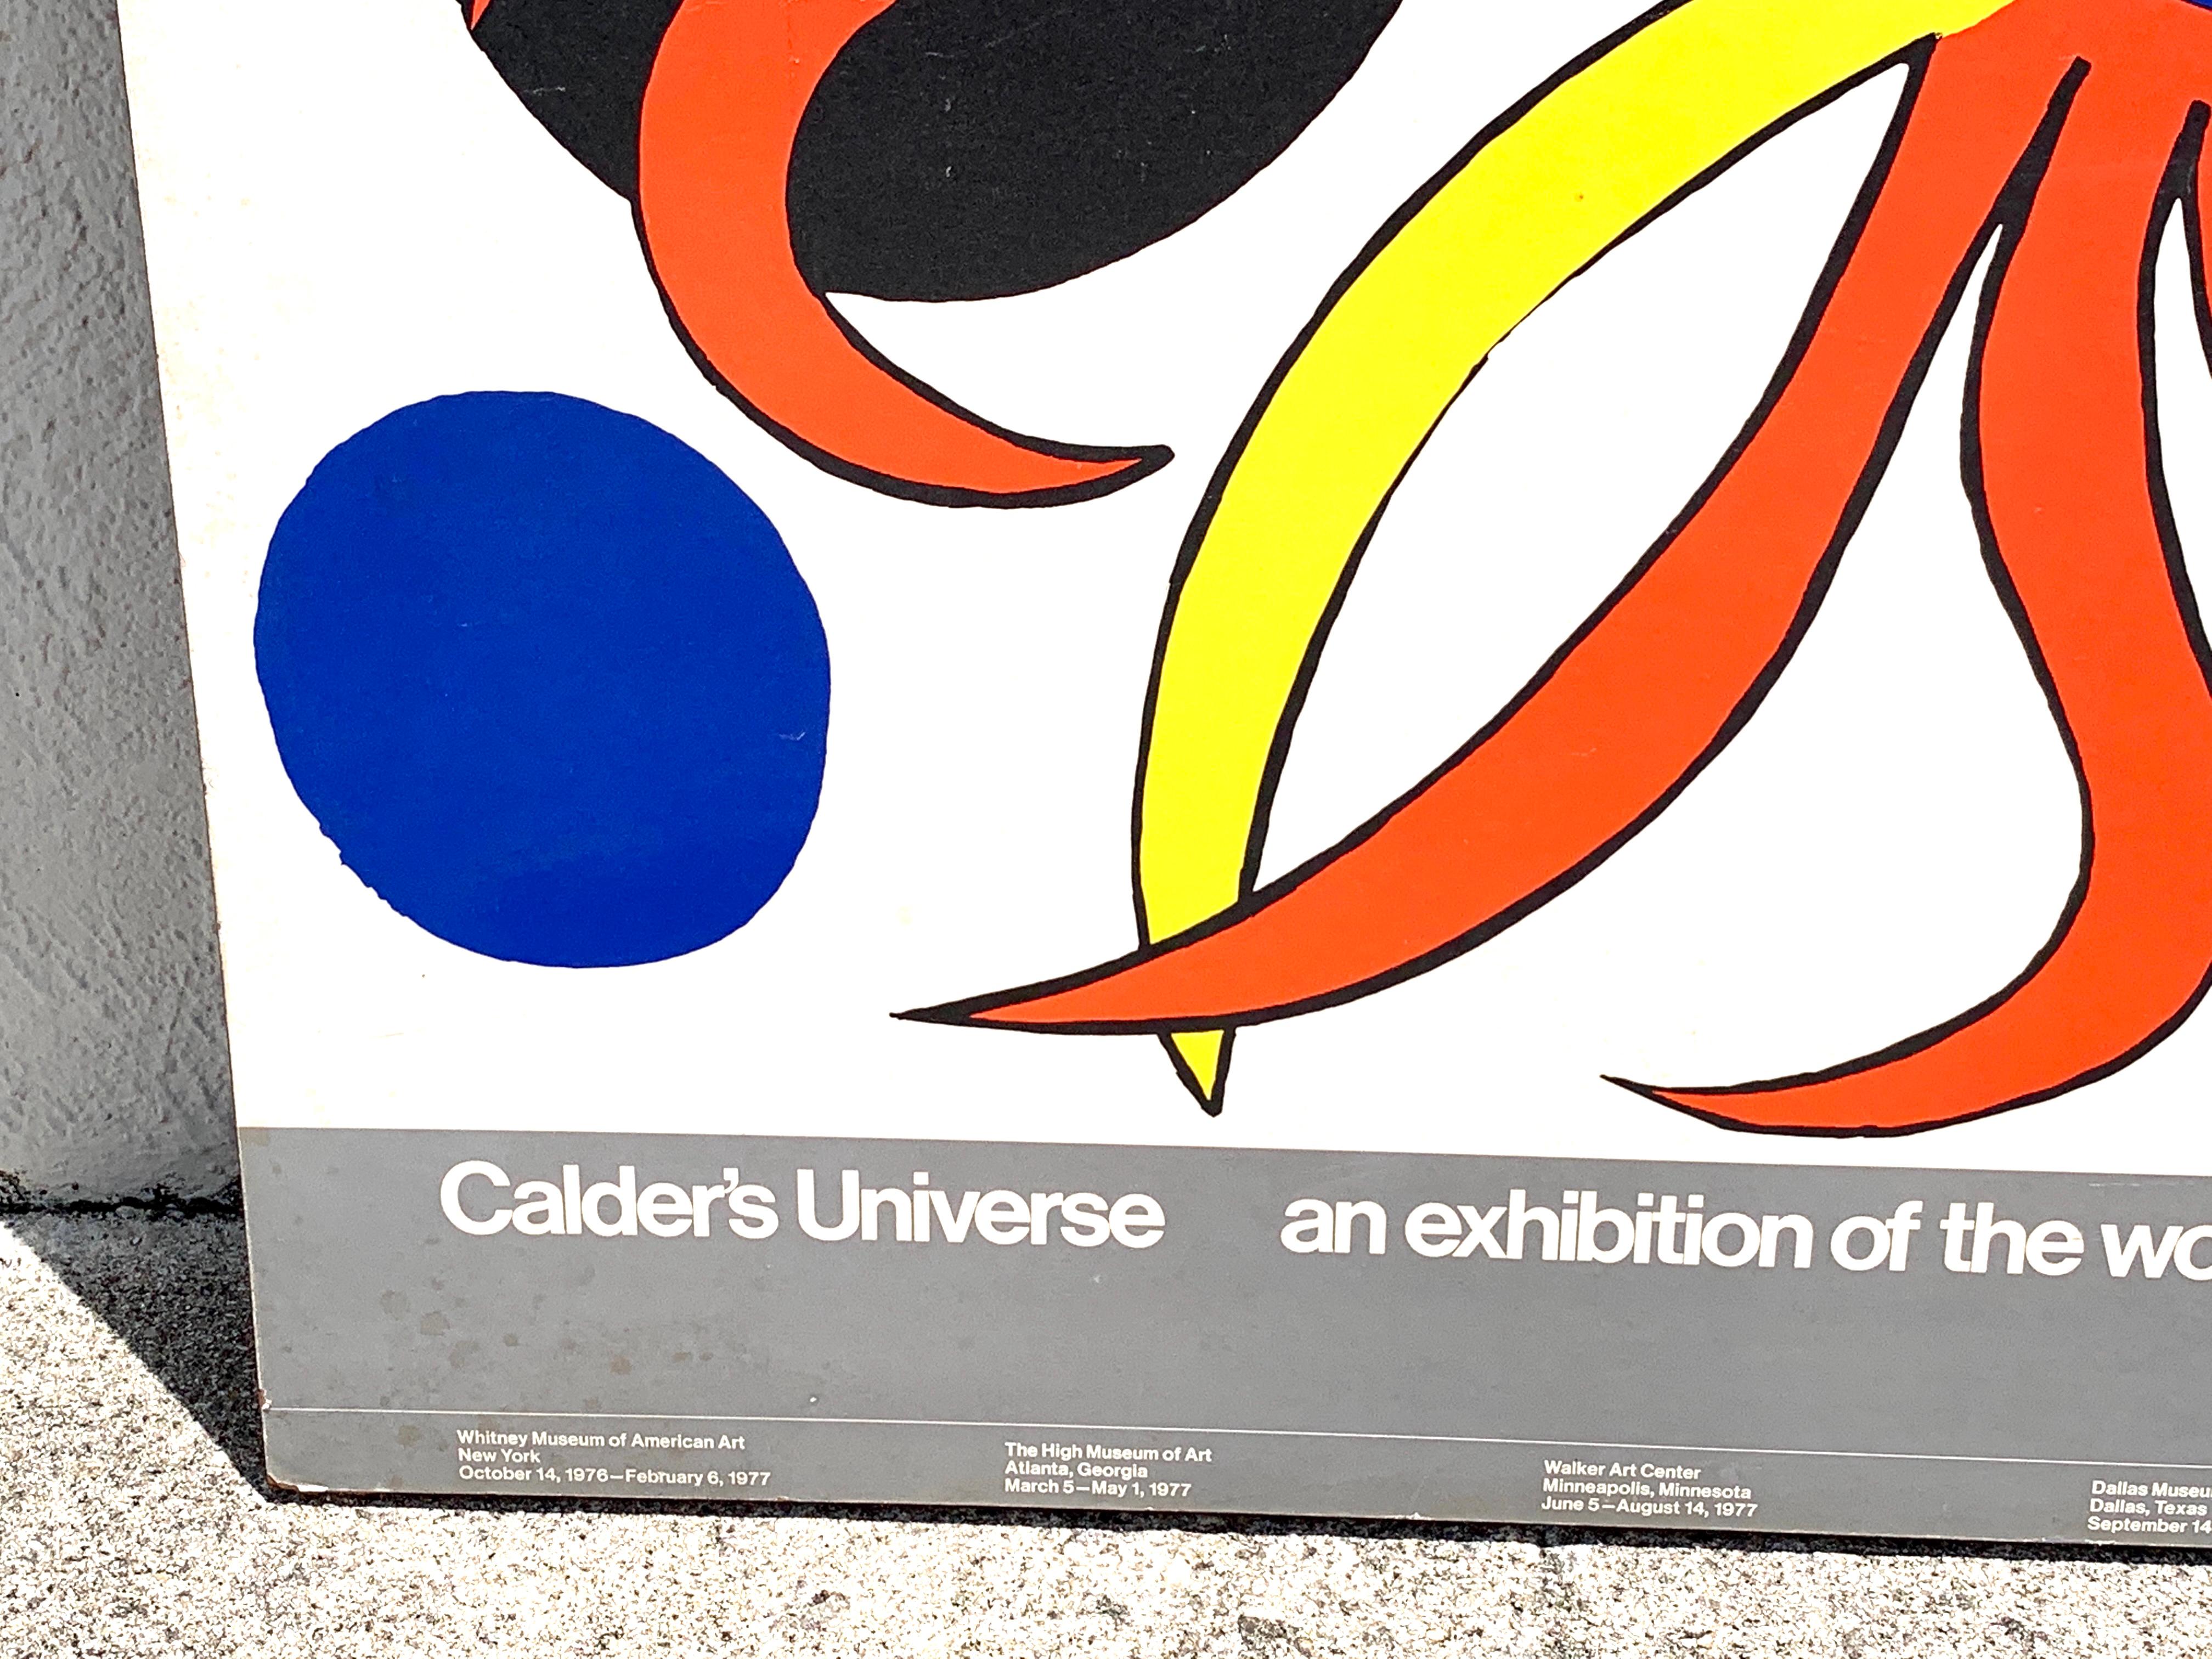 calder's universe